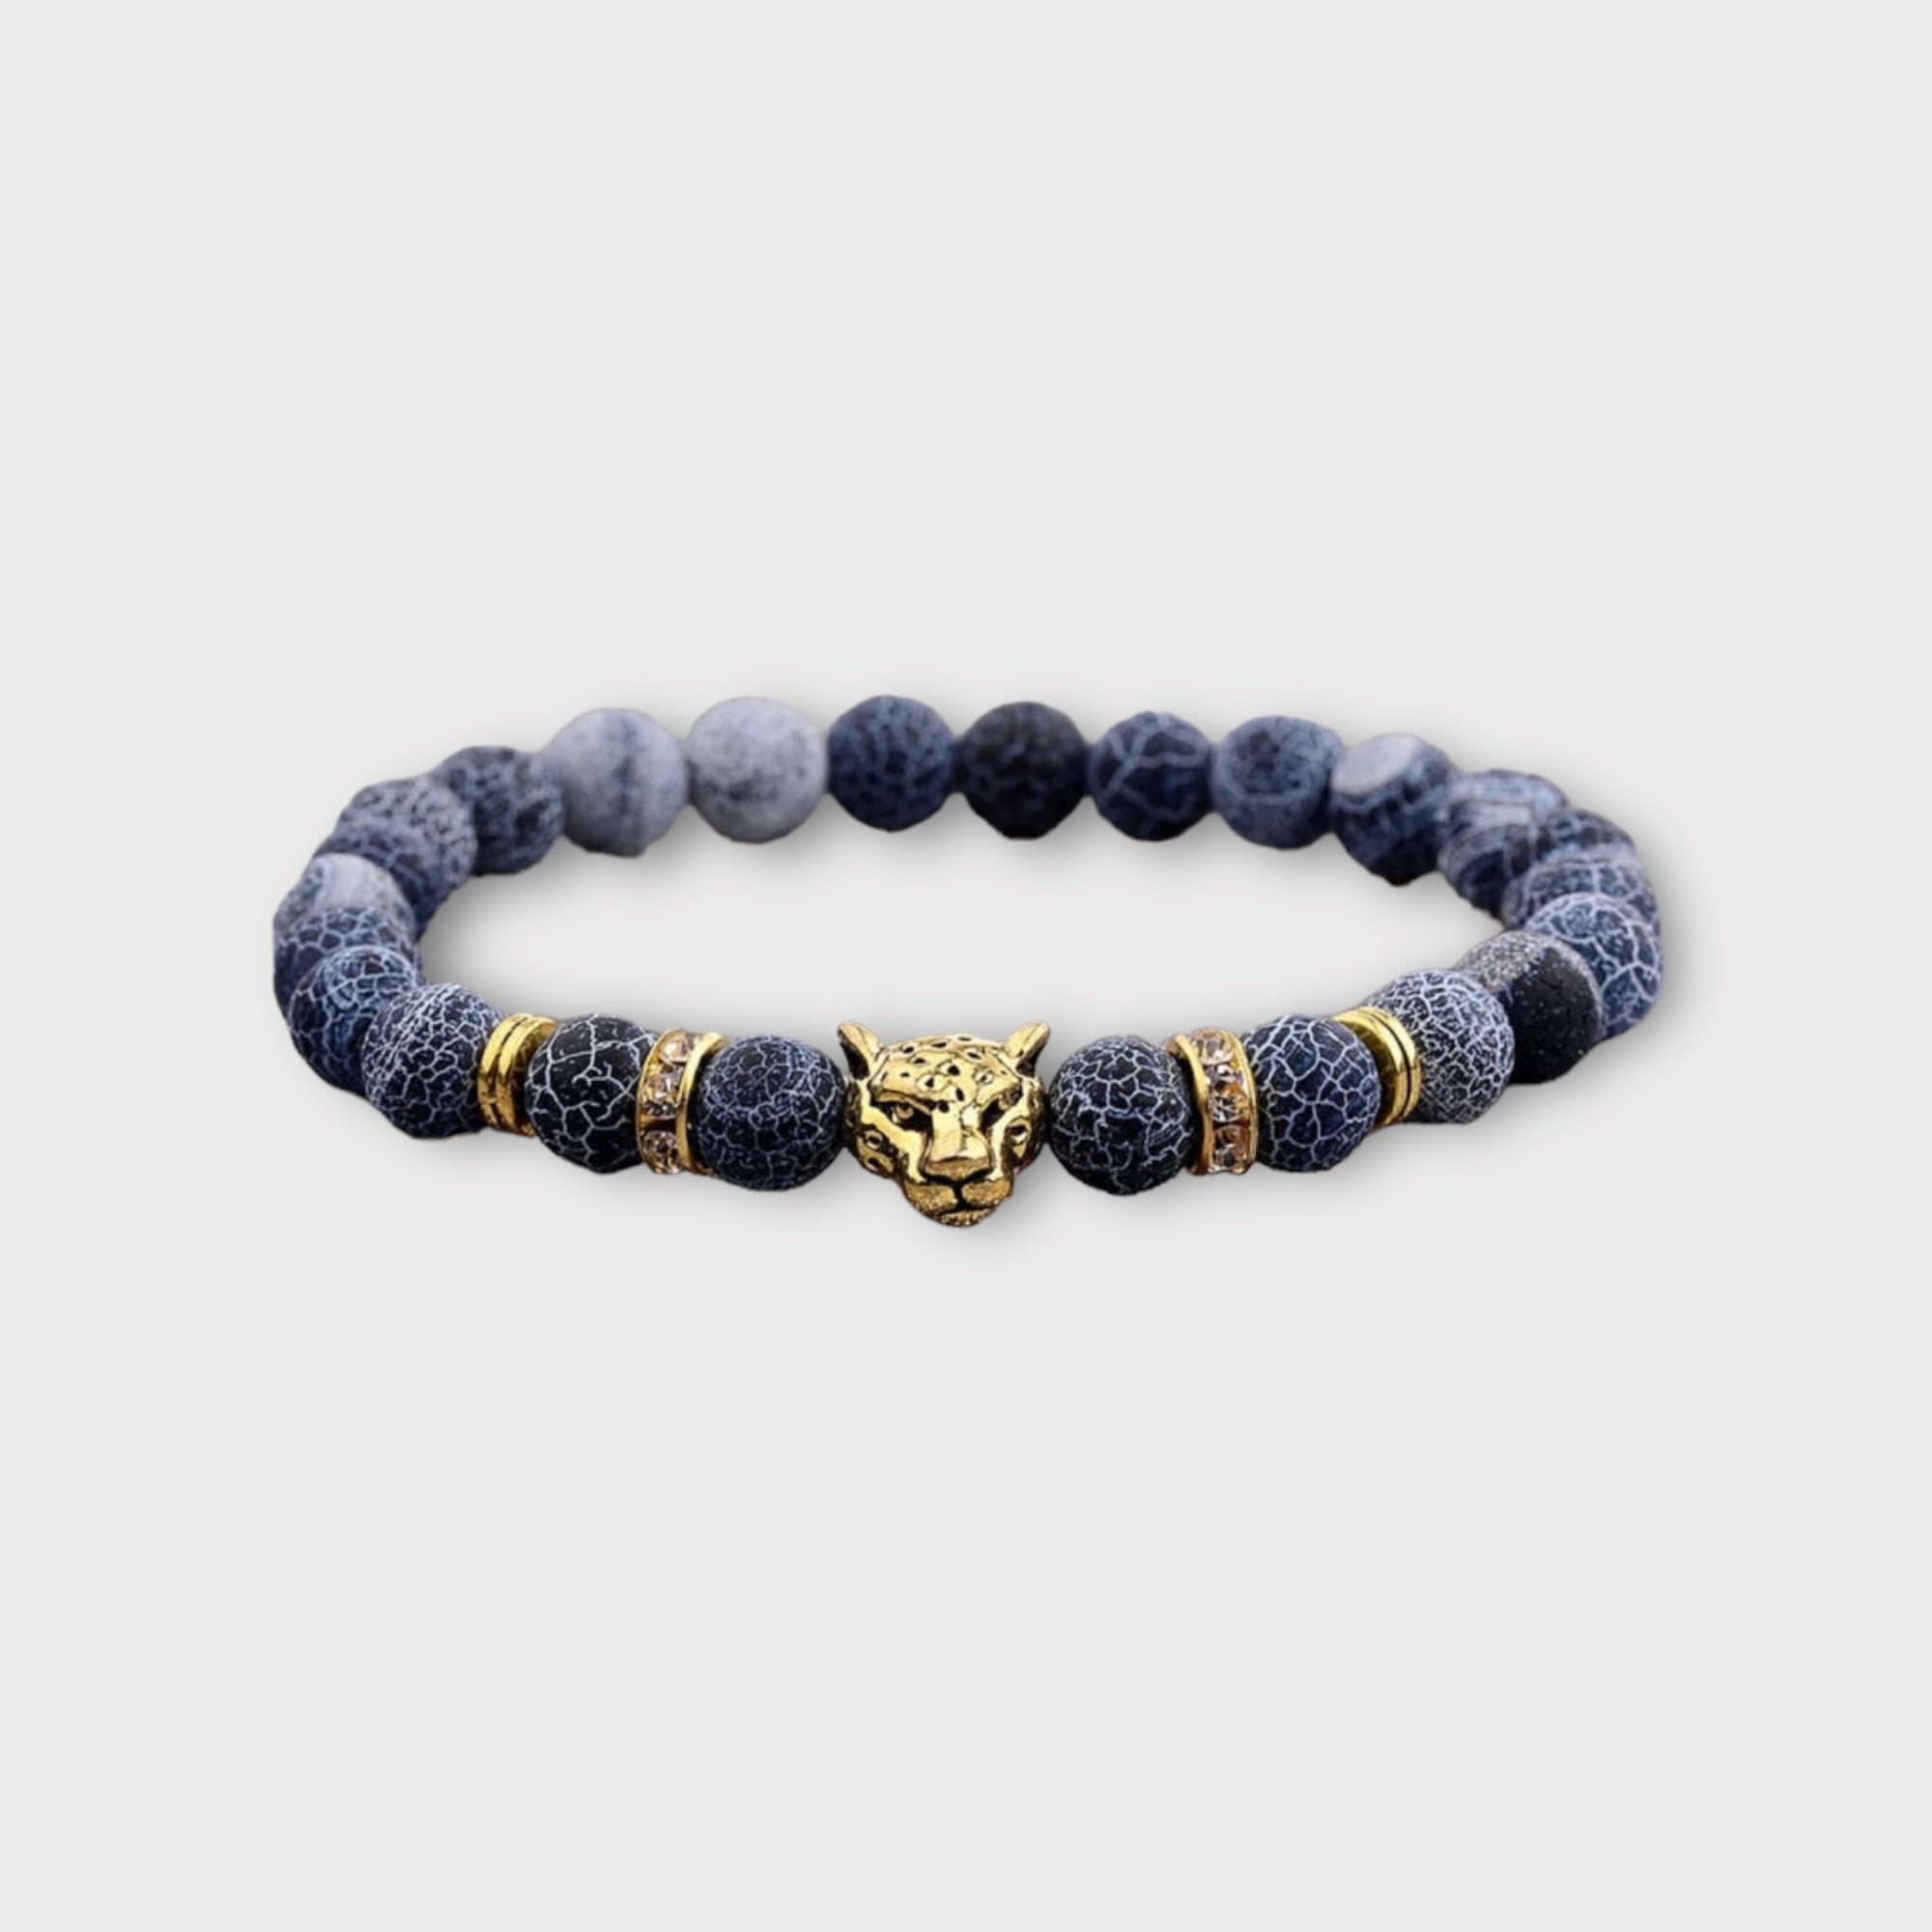 'SNOP' Men's tiger head round beads bracelets for men